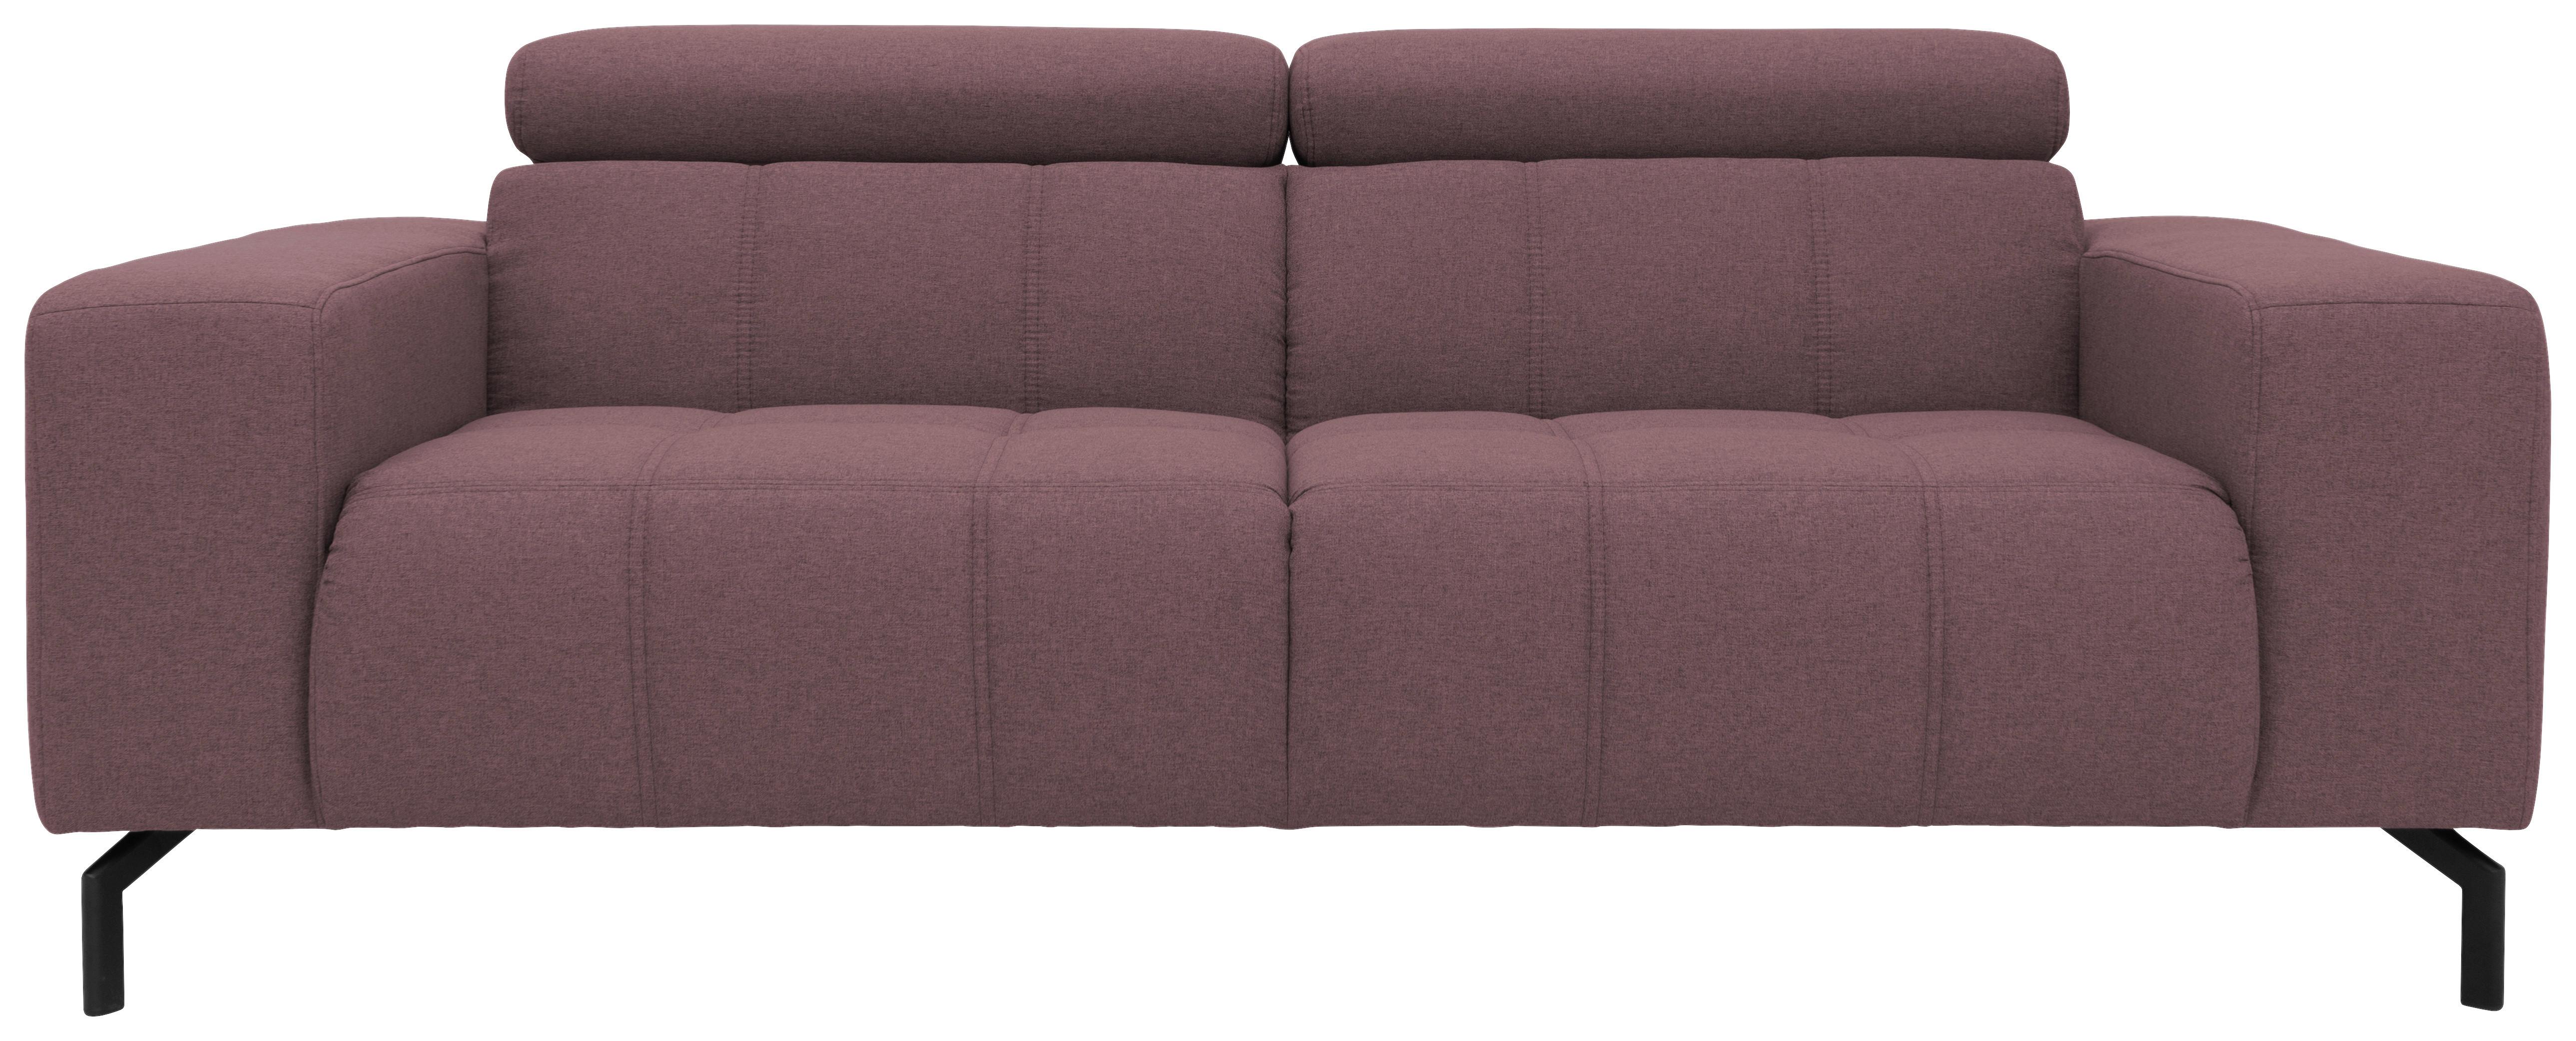 2-Sitzer-Sofa Cunelli Beere Webstoff - Beere/Schwarz, Design, Textil (208/79/104cm)